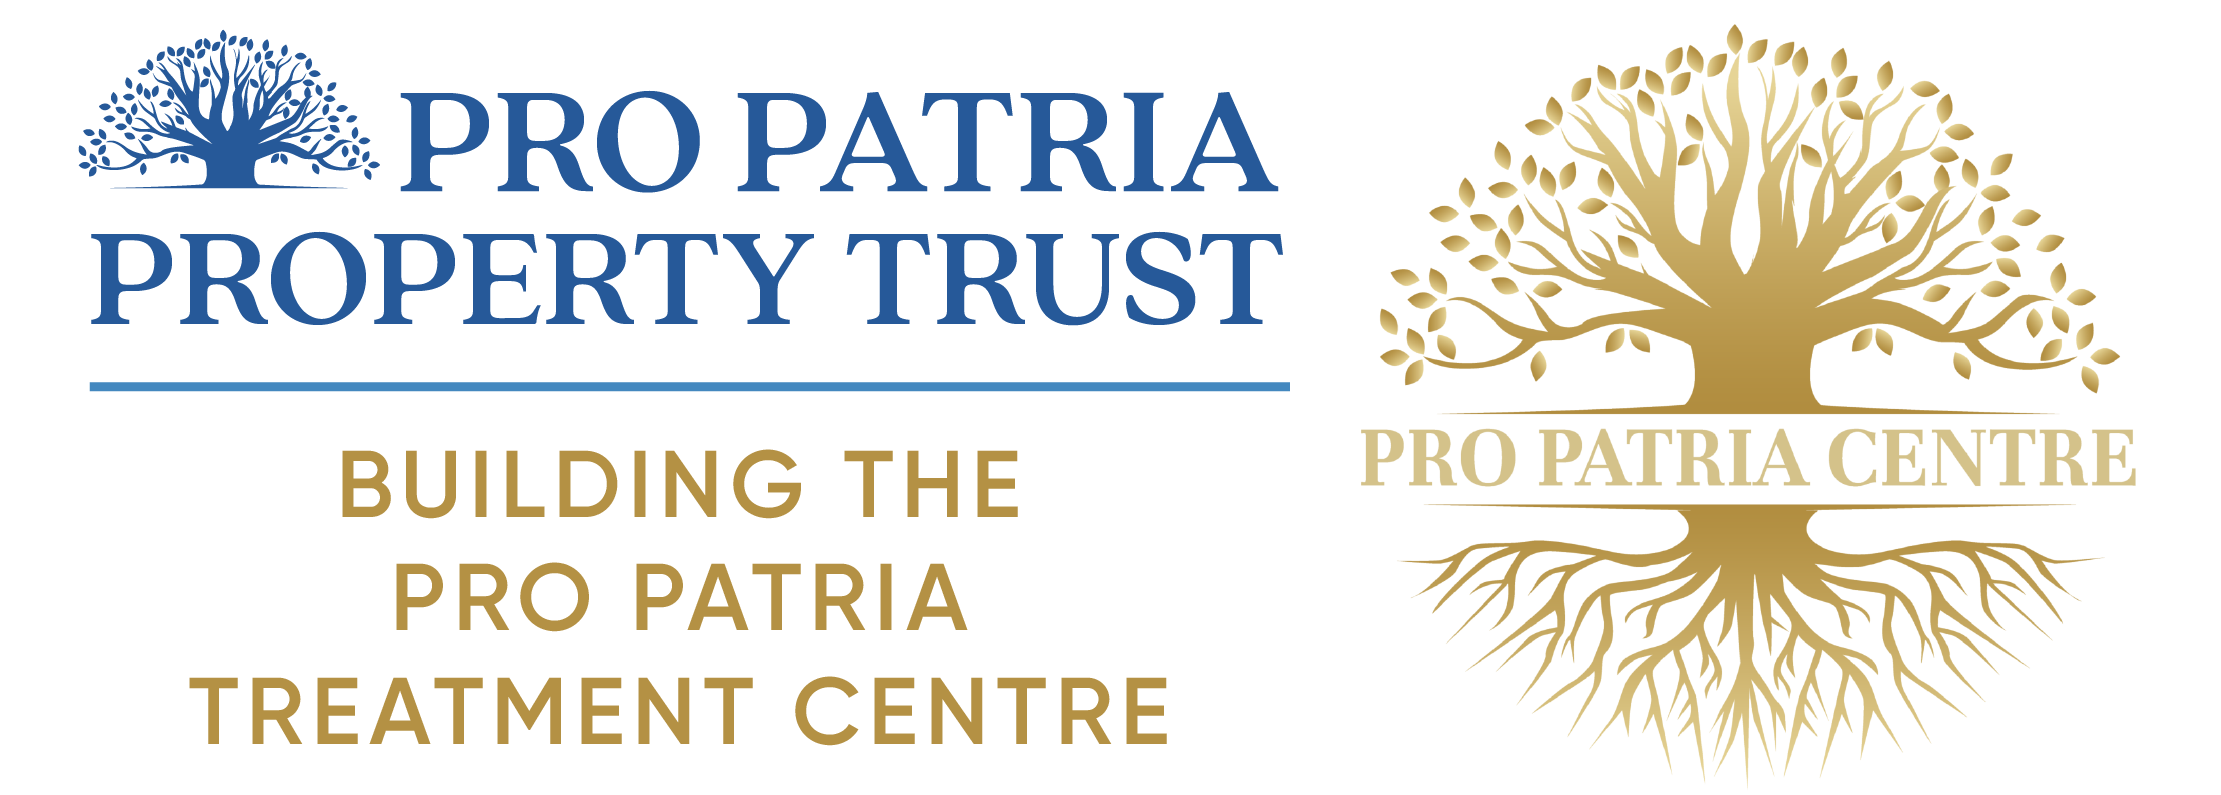 Pro Patria Building Trust - Housing the Pro Patria Centre